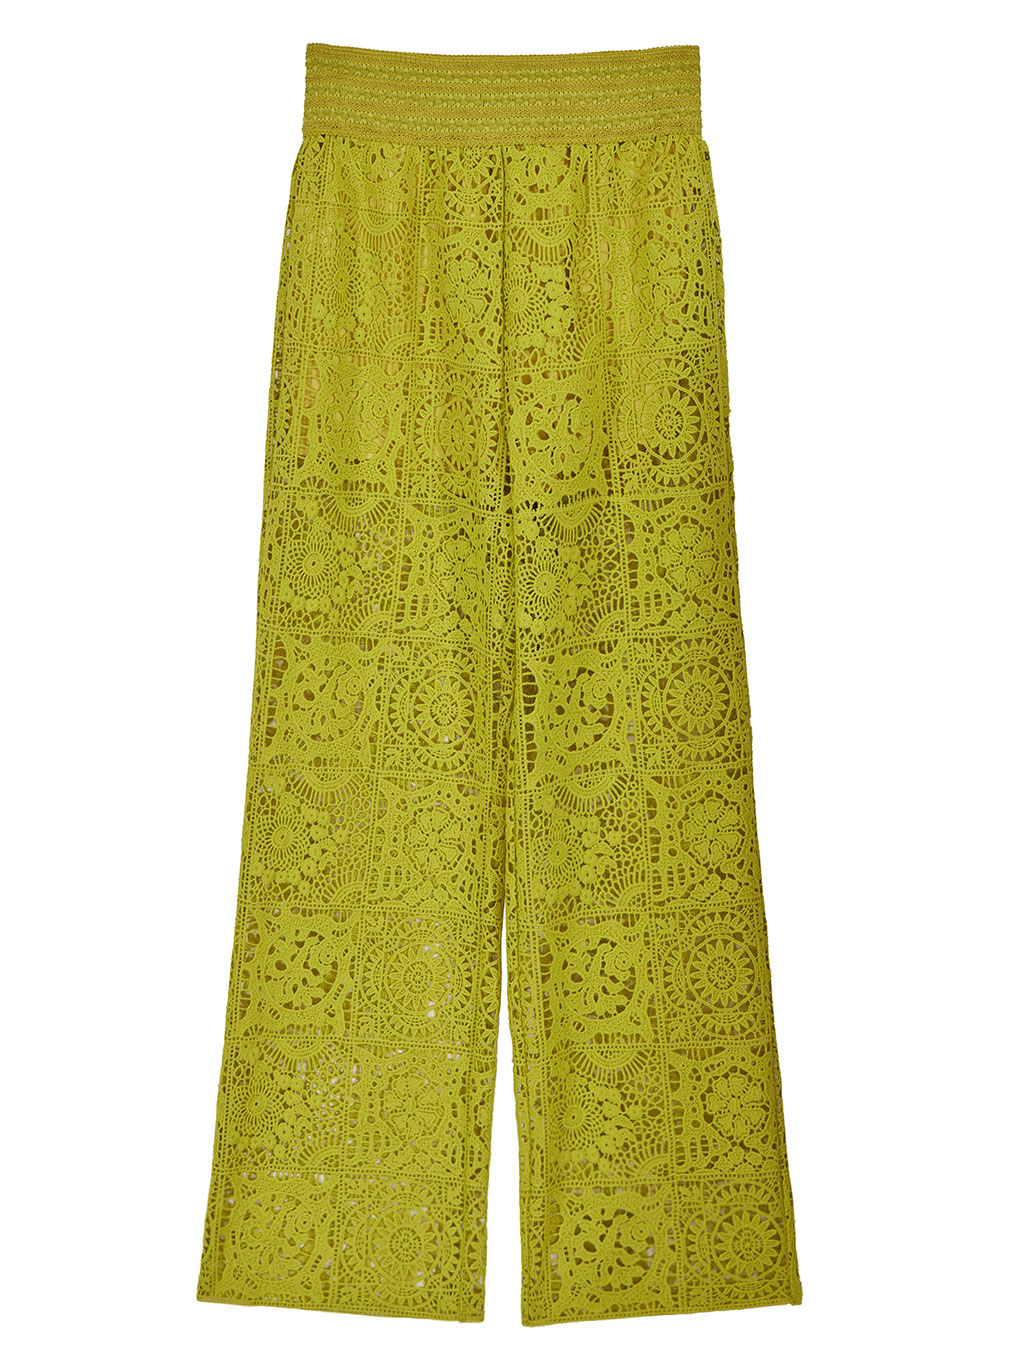 Golden M Zara slacks discount 93% WOMEN FASHION Trousers Slacks Shorts 